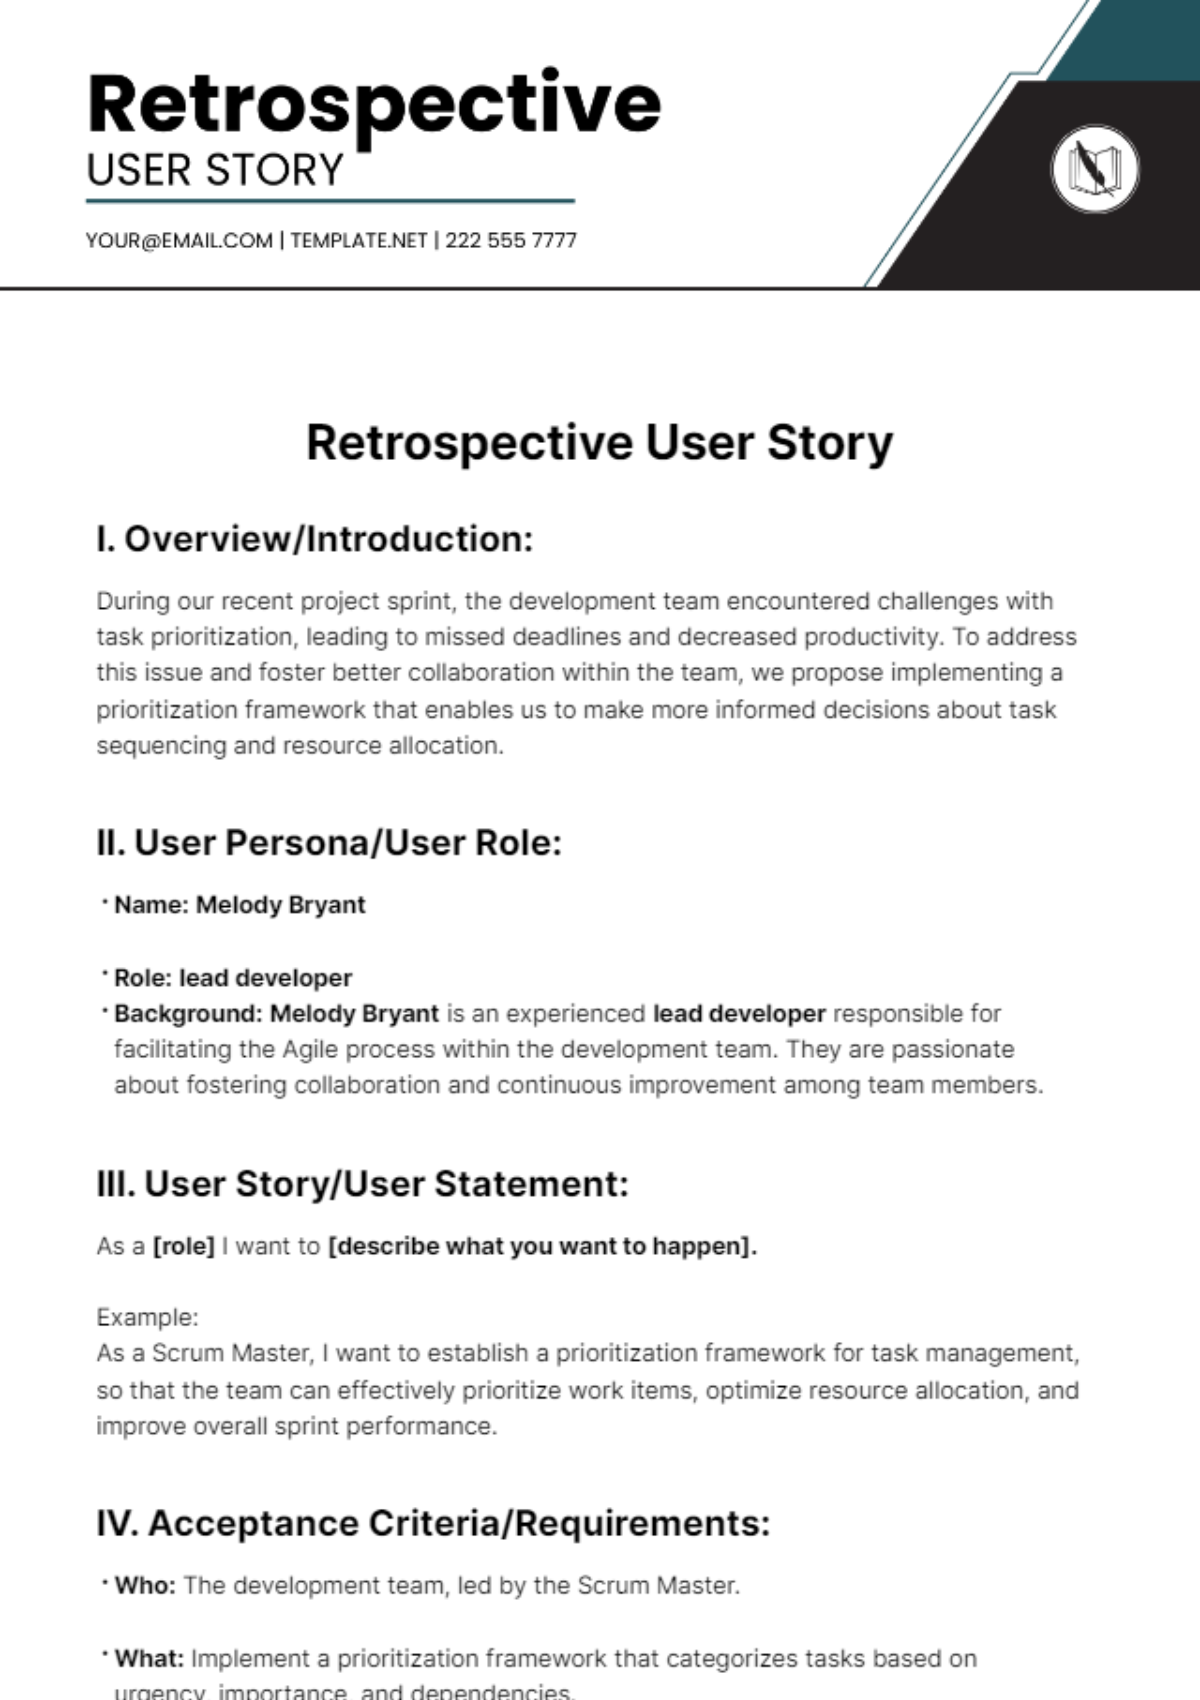 Retrospective User Story Template